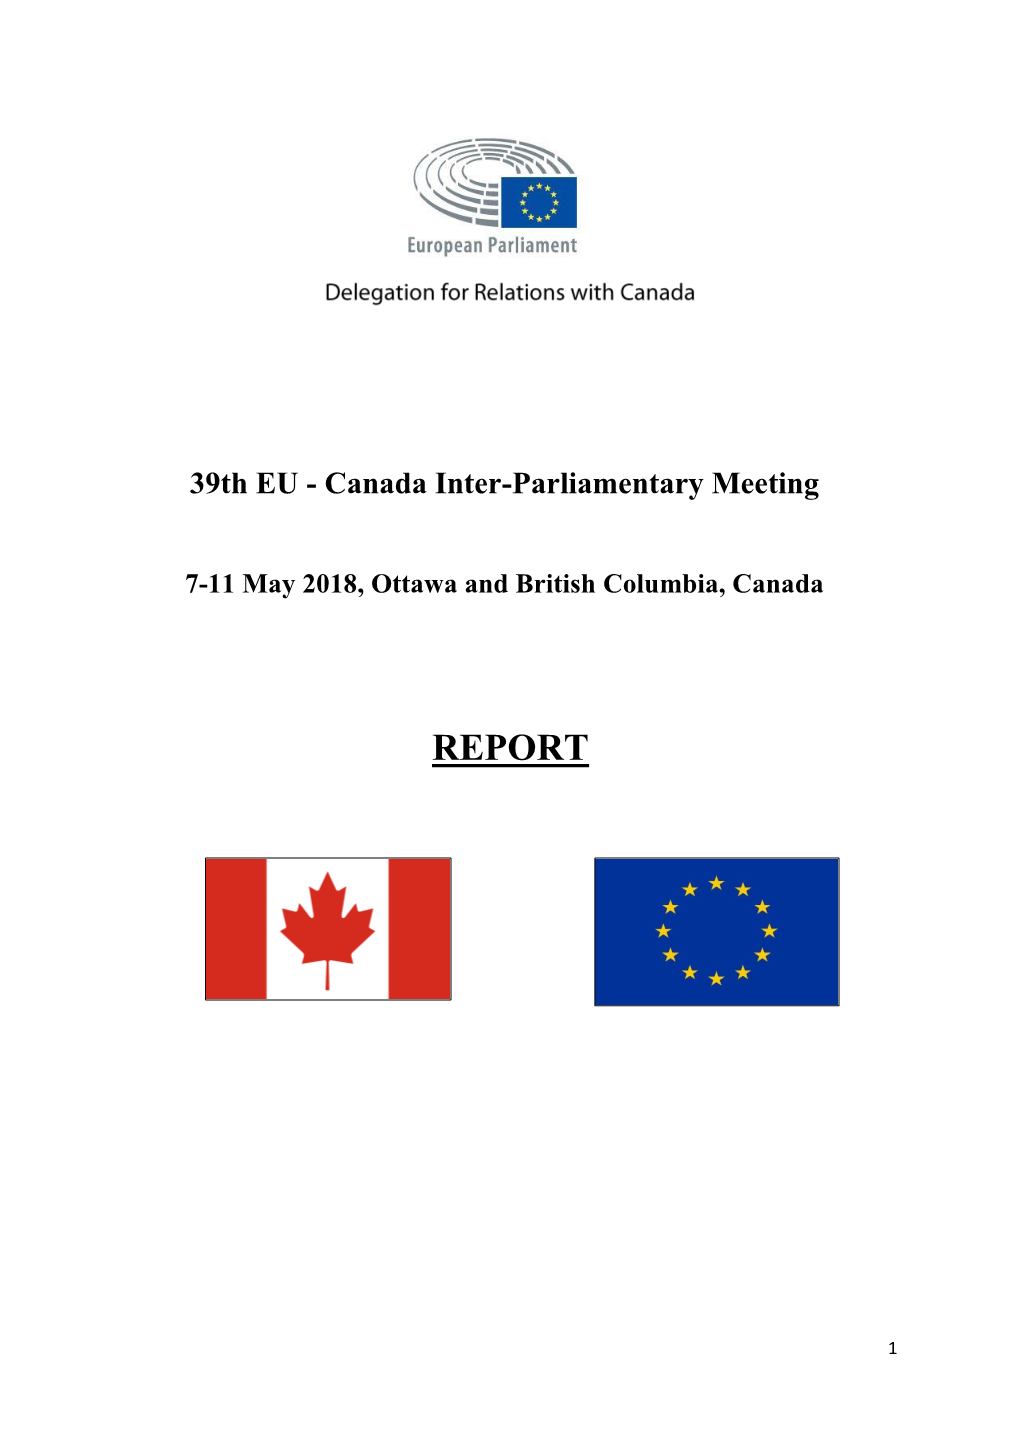 Report of the 39Th EU-Canada